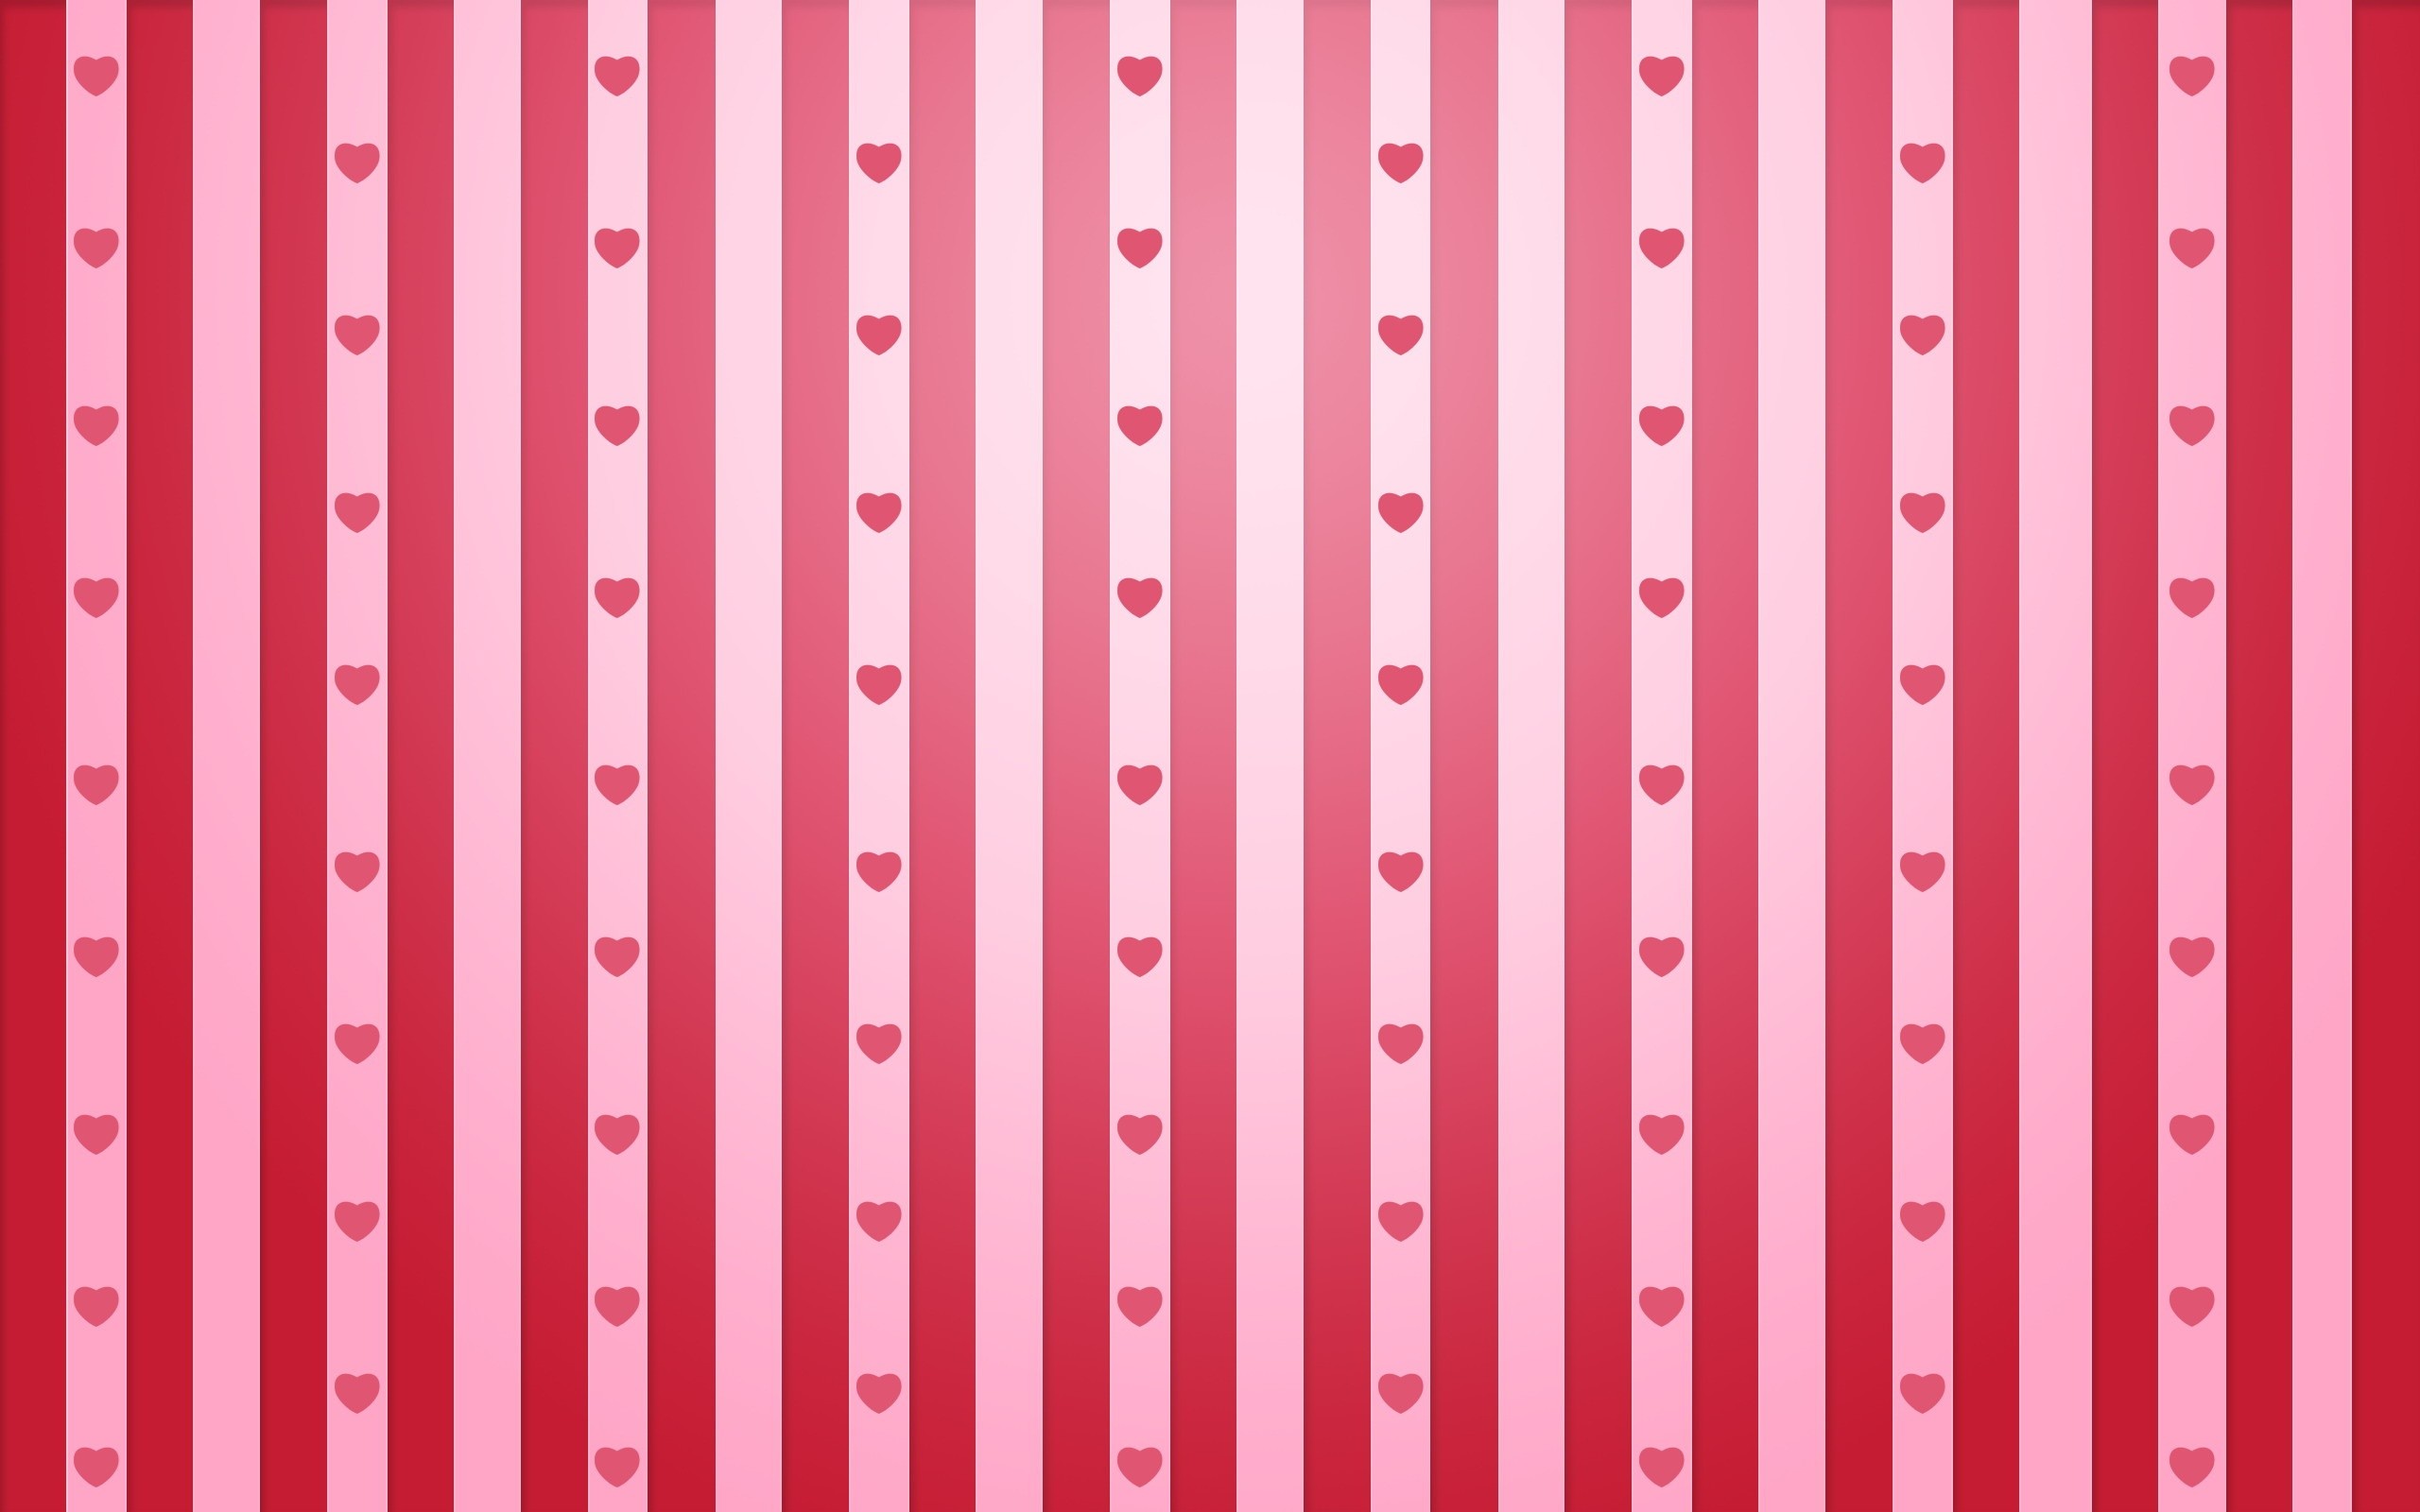 General 2560x1600 lines Valentine's Day texture heart (design) love